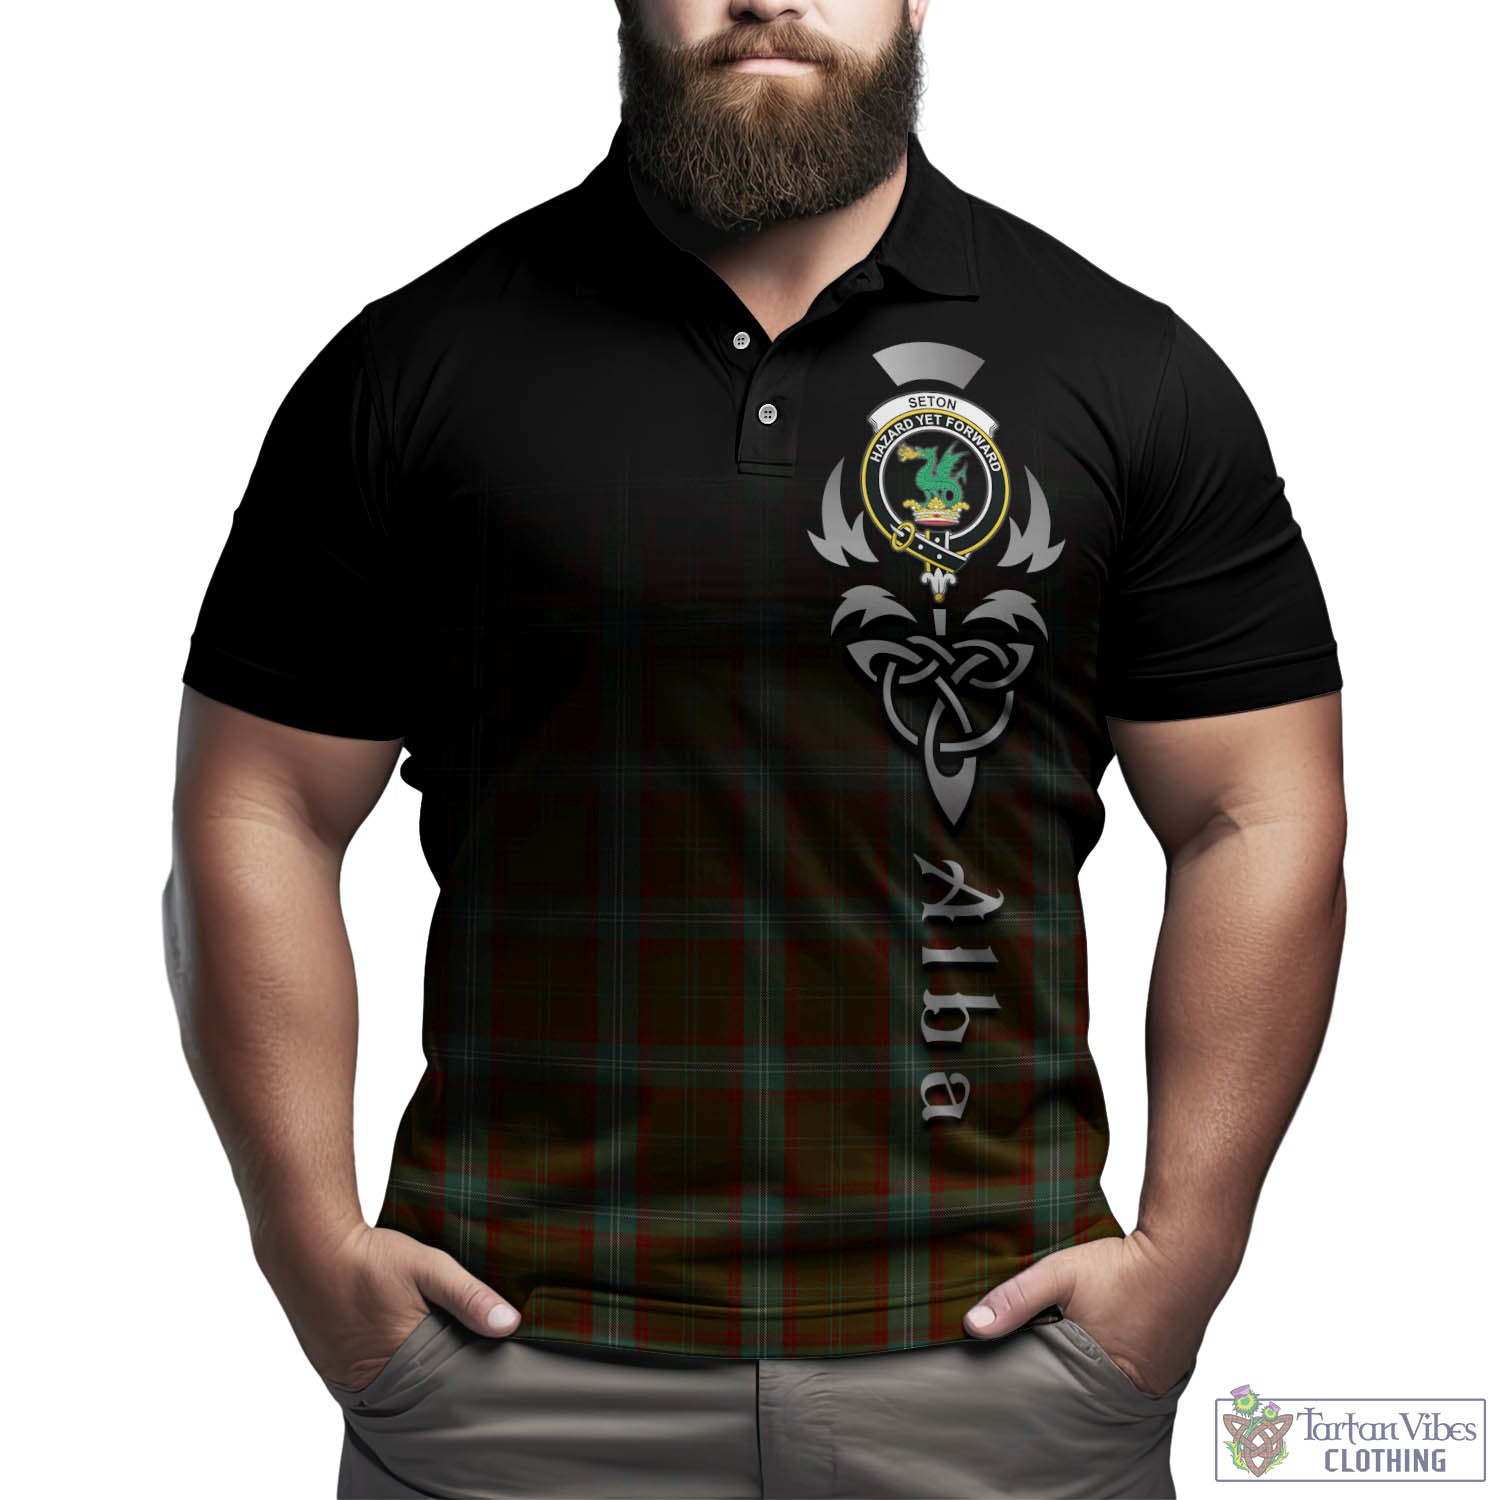 Tartan Vibes Clothing Seton Hunting Tartan Polo Shirt Featuring Alba Gu Brath Family Crest Celtic Inspired